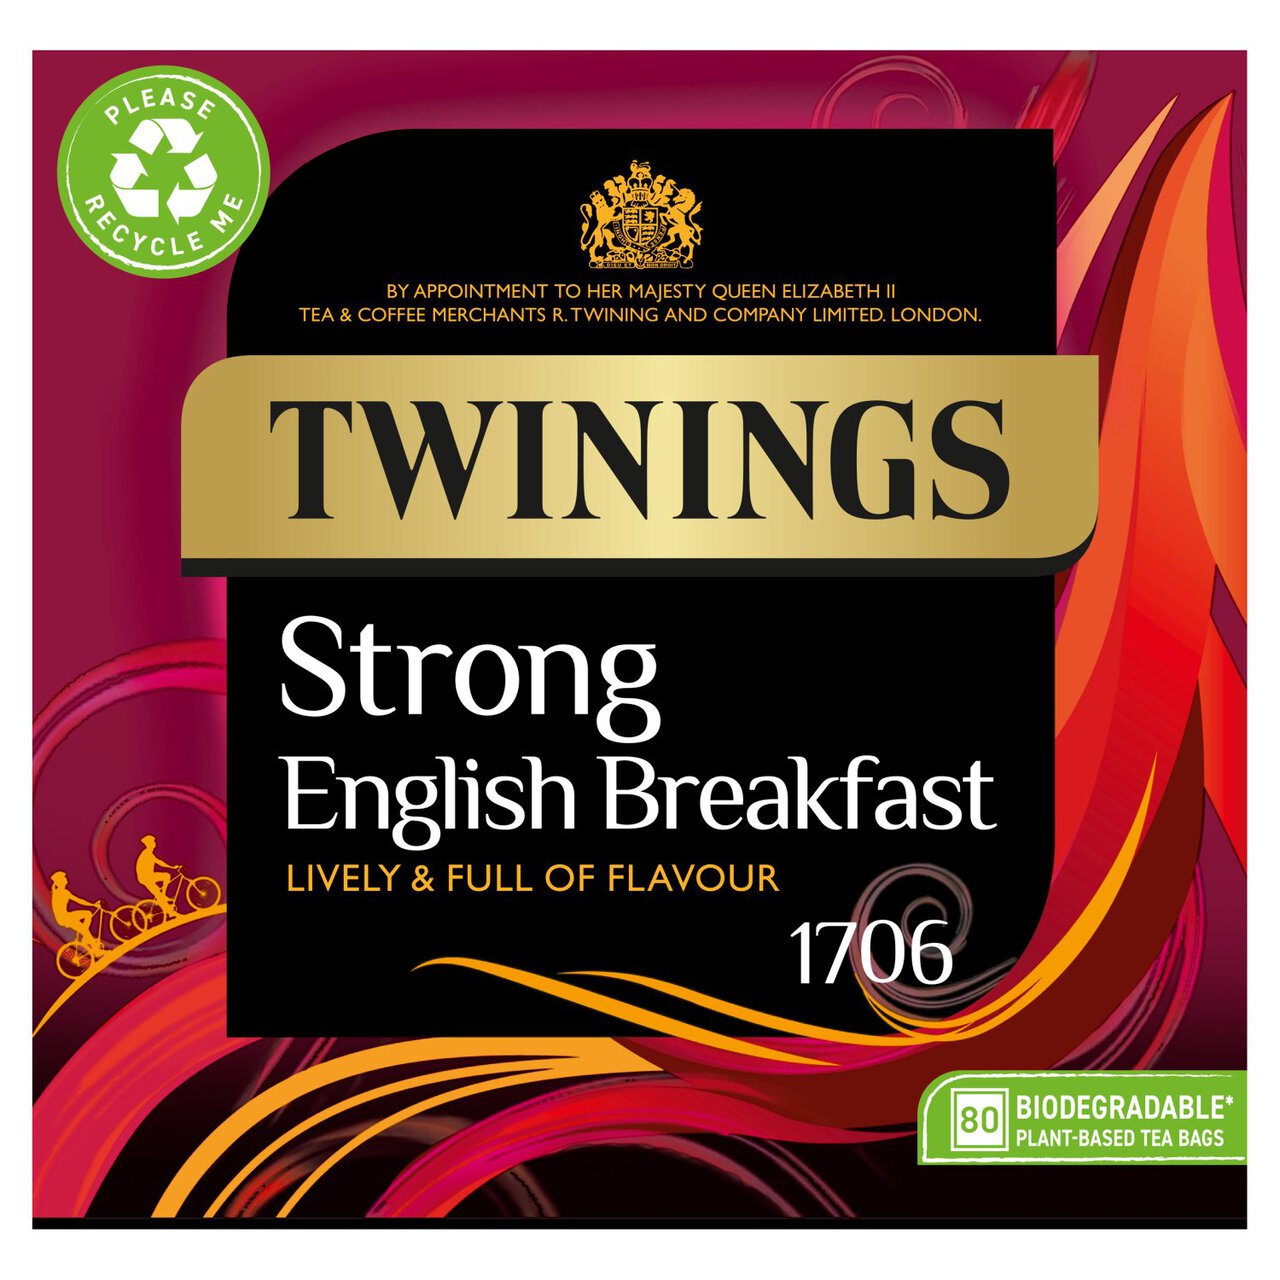 Twinings Assam Bold Tea 80 pack | Ally's Basket - Direct from Austr...